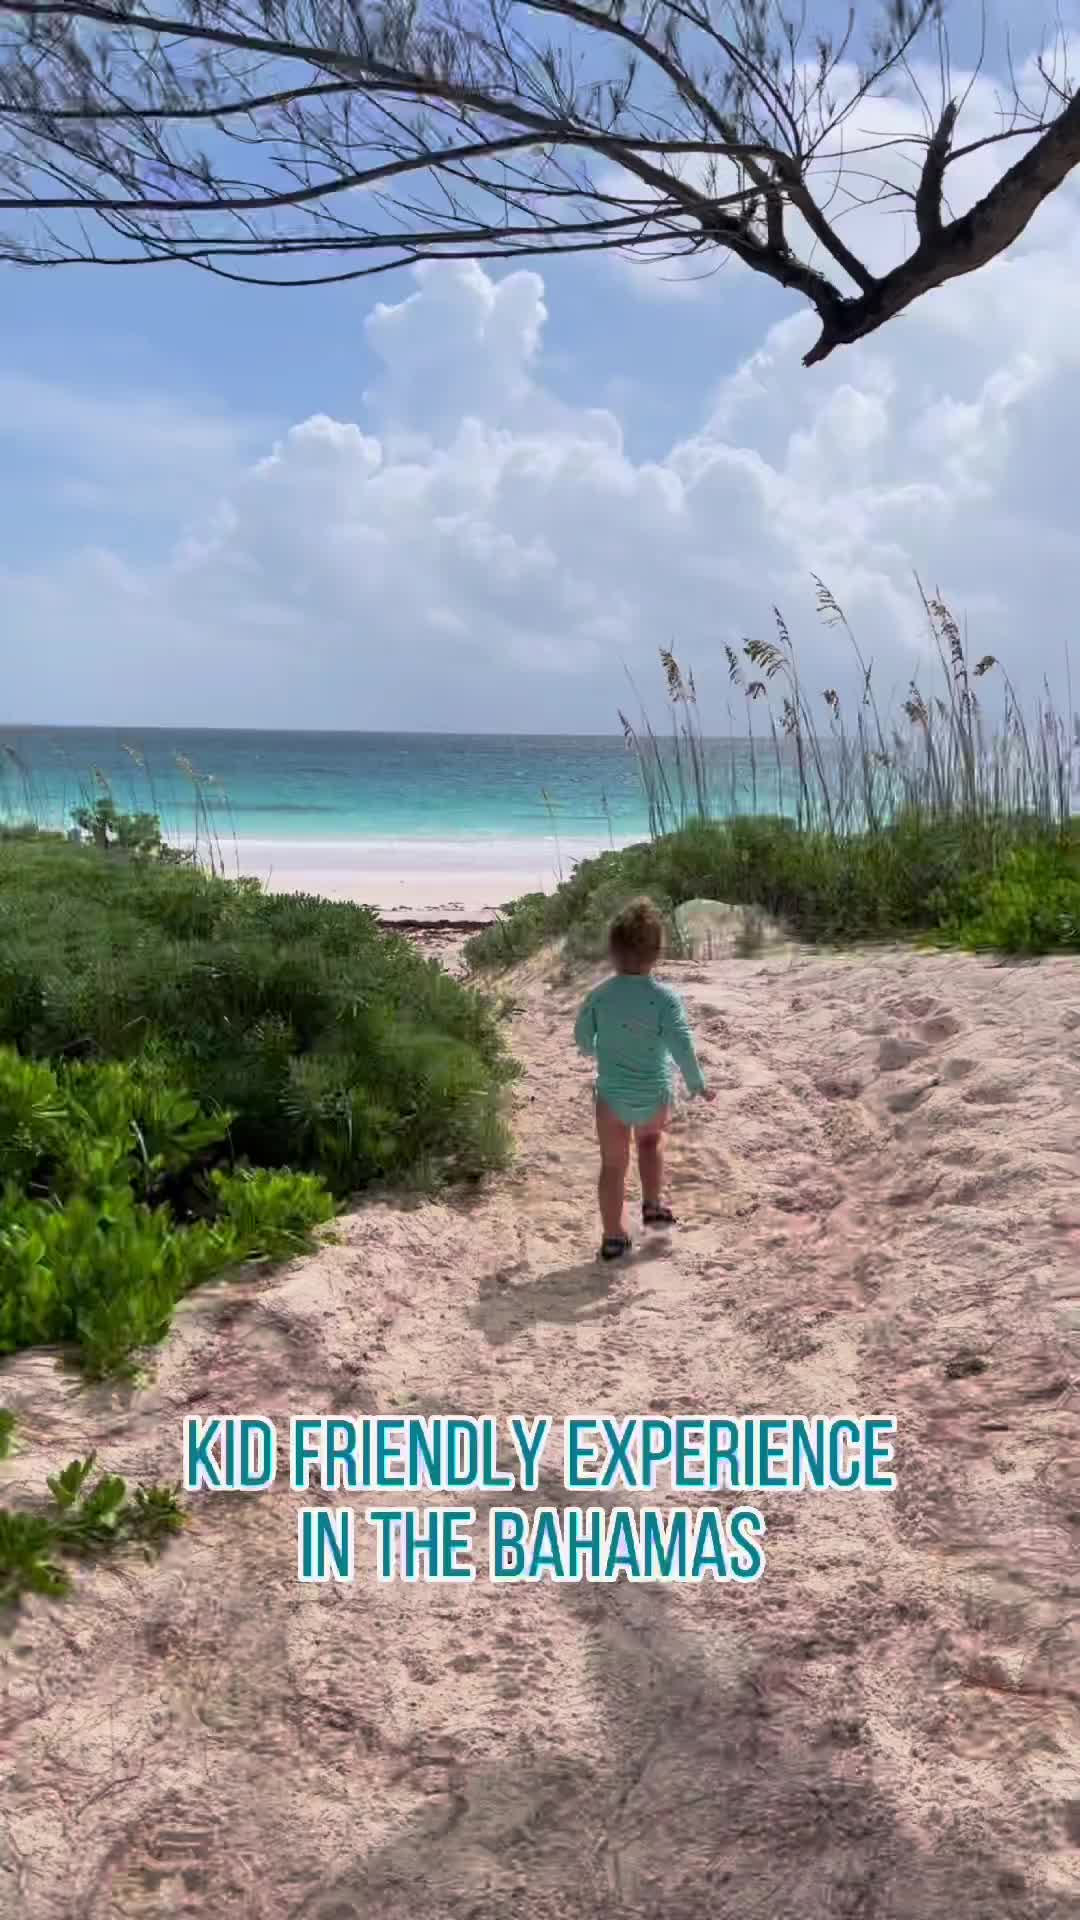 Kid-Friendly Fun: Feed Sea Turtles in the Bahamas